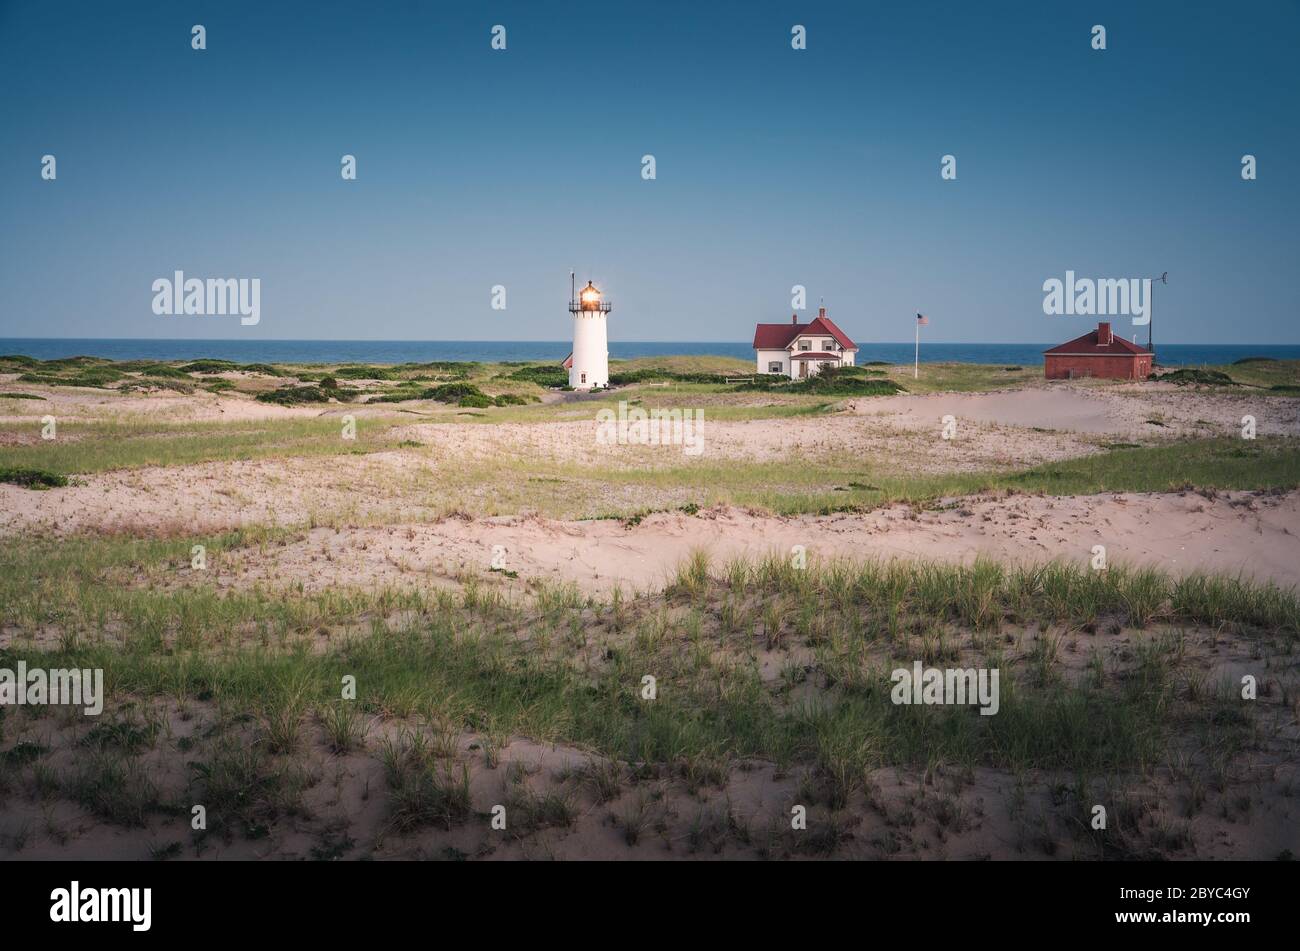 Race Point Light Lighthouse in beach dunes on the beach at Cape Cod, New England, Massachusetts Stock Photo